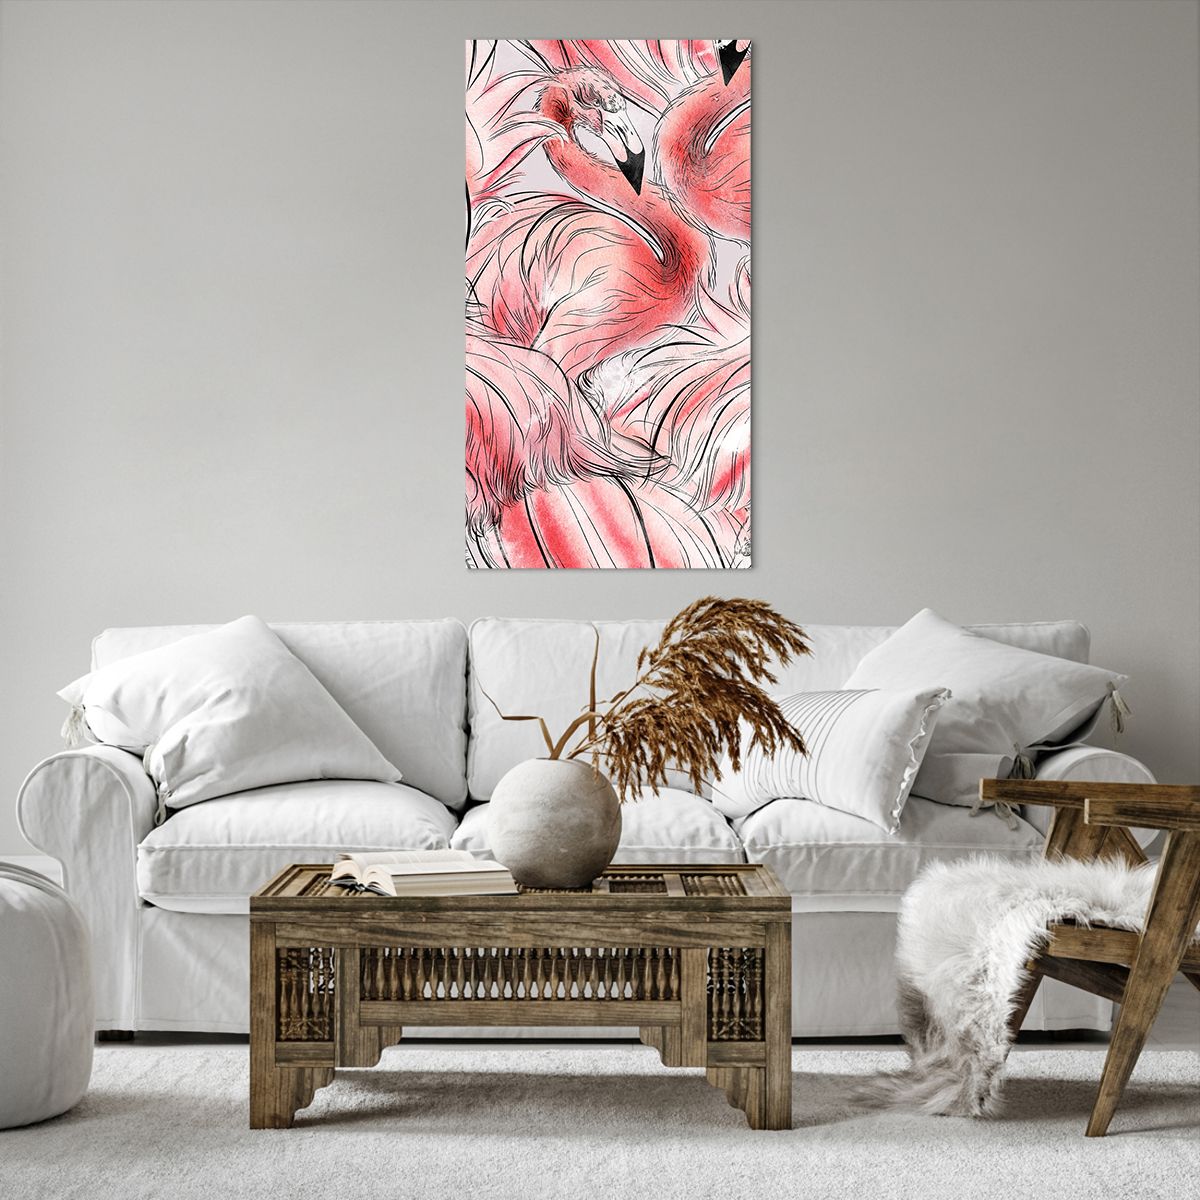 Bild auf Leinwand Flamingo, Bild auf Leinwand Vogel, Bild auf Leinwand Grafik, Bild auf Leinwand Zeichnung, Bild auf Leinwand Pastellfarben